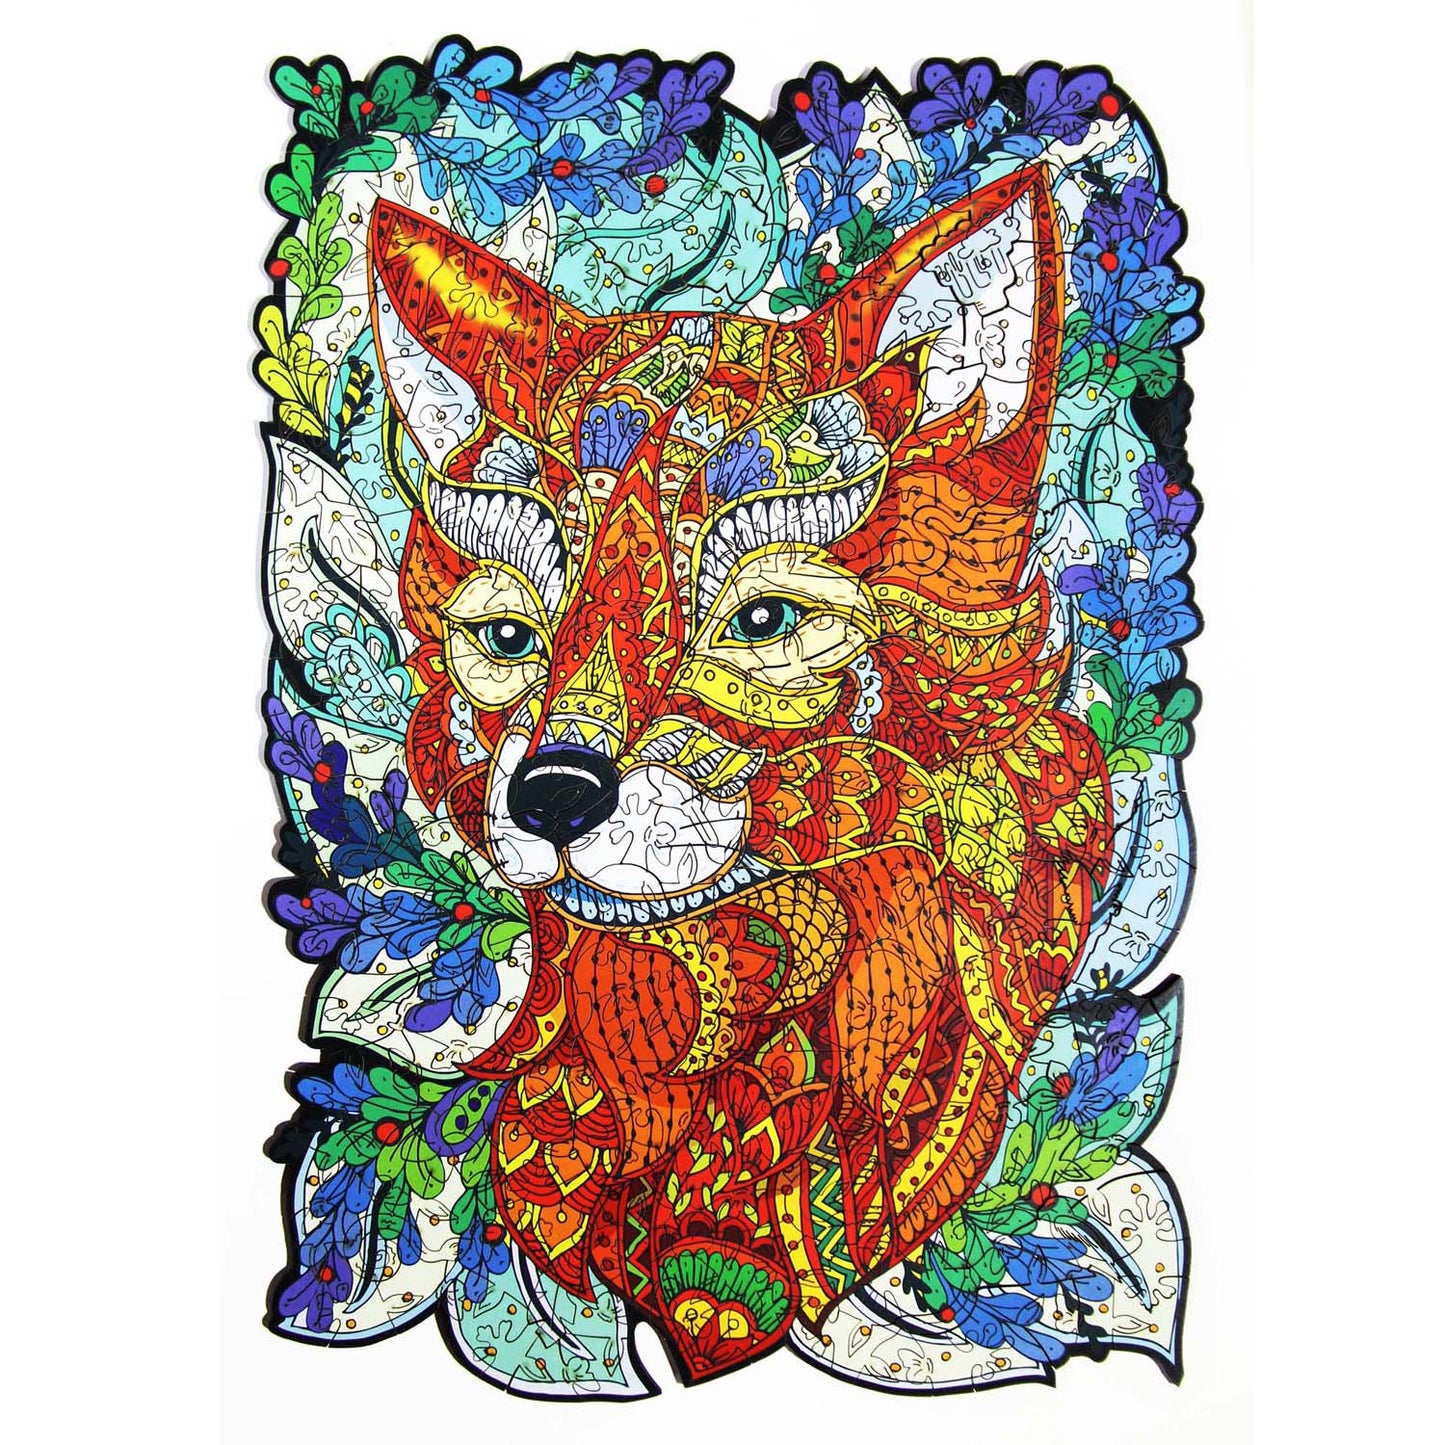 PW009e - Wooden puzzles "Wild fox"(293pcs)